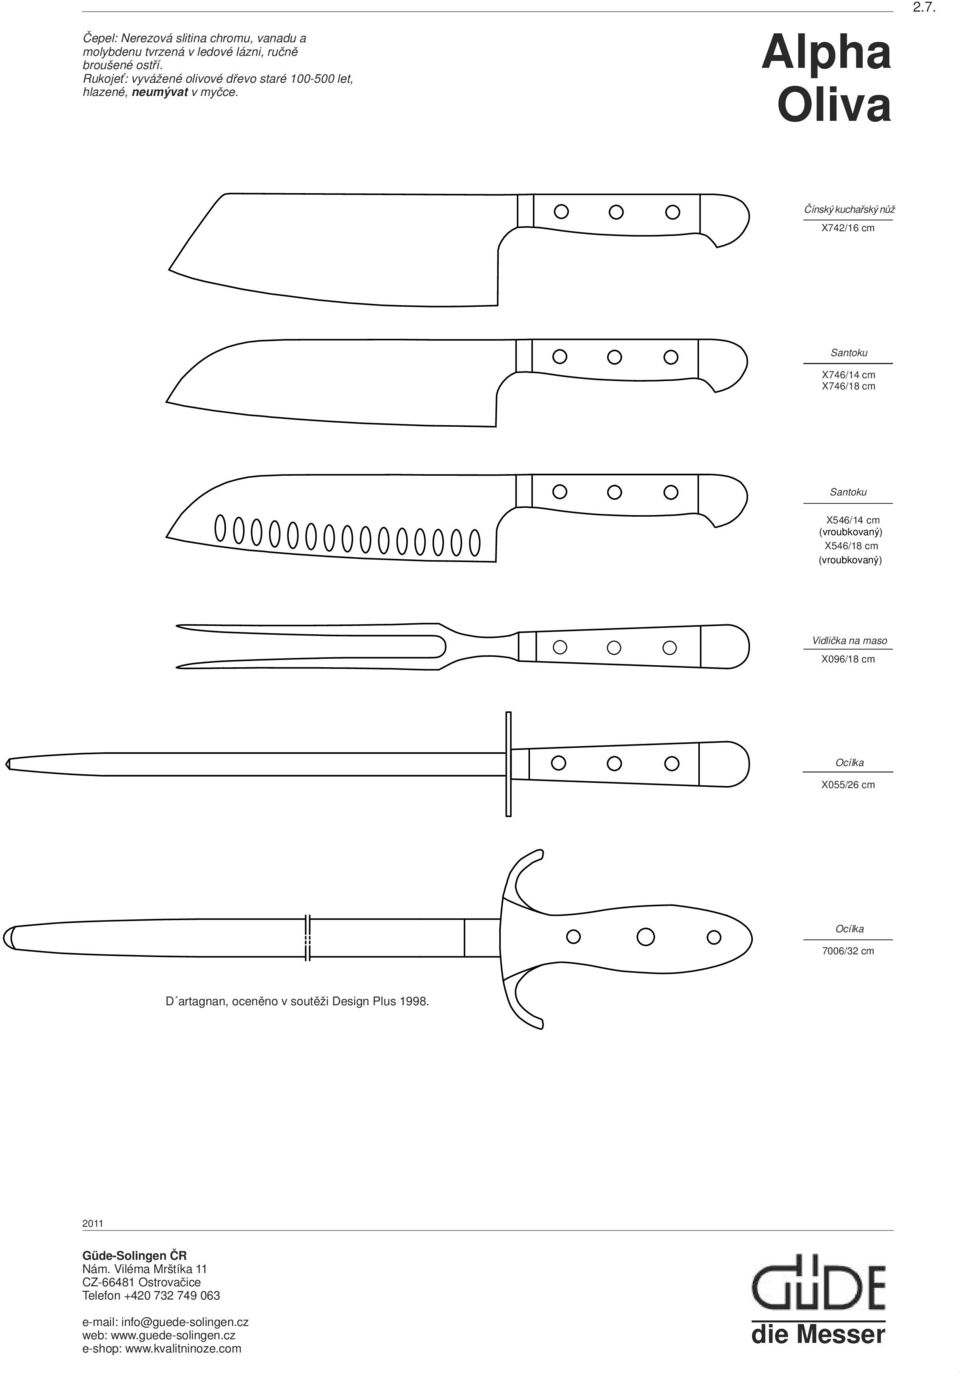 Čínský kuchařský nůž X742/16 cm Santoku X746/14 cm X746/18 cm Santoku X546/14 cm (vroubkovaný) X546/18 cm